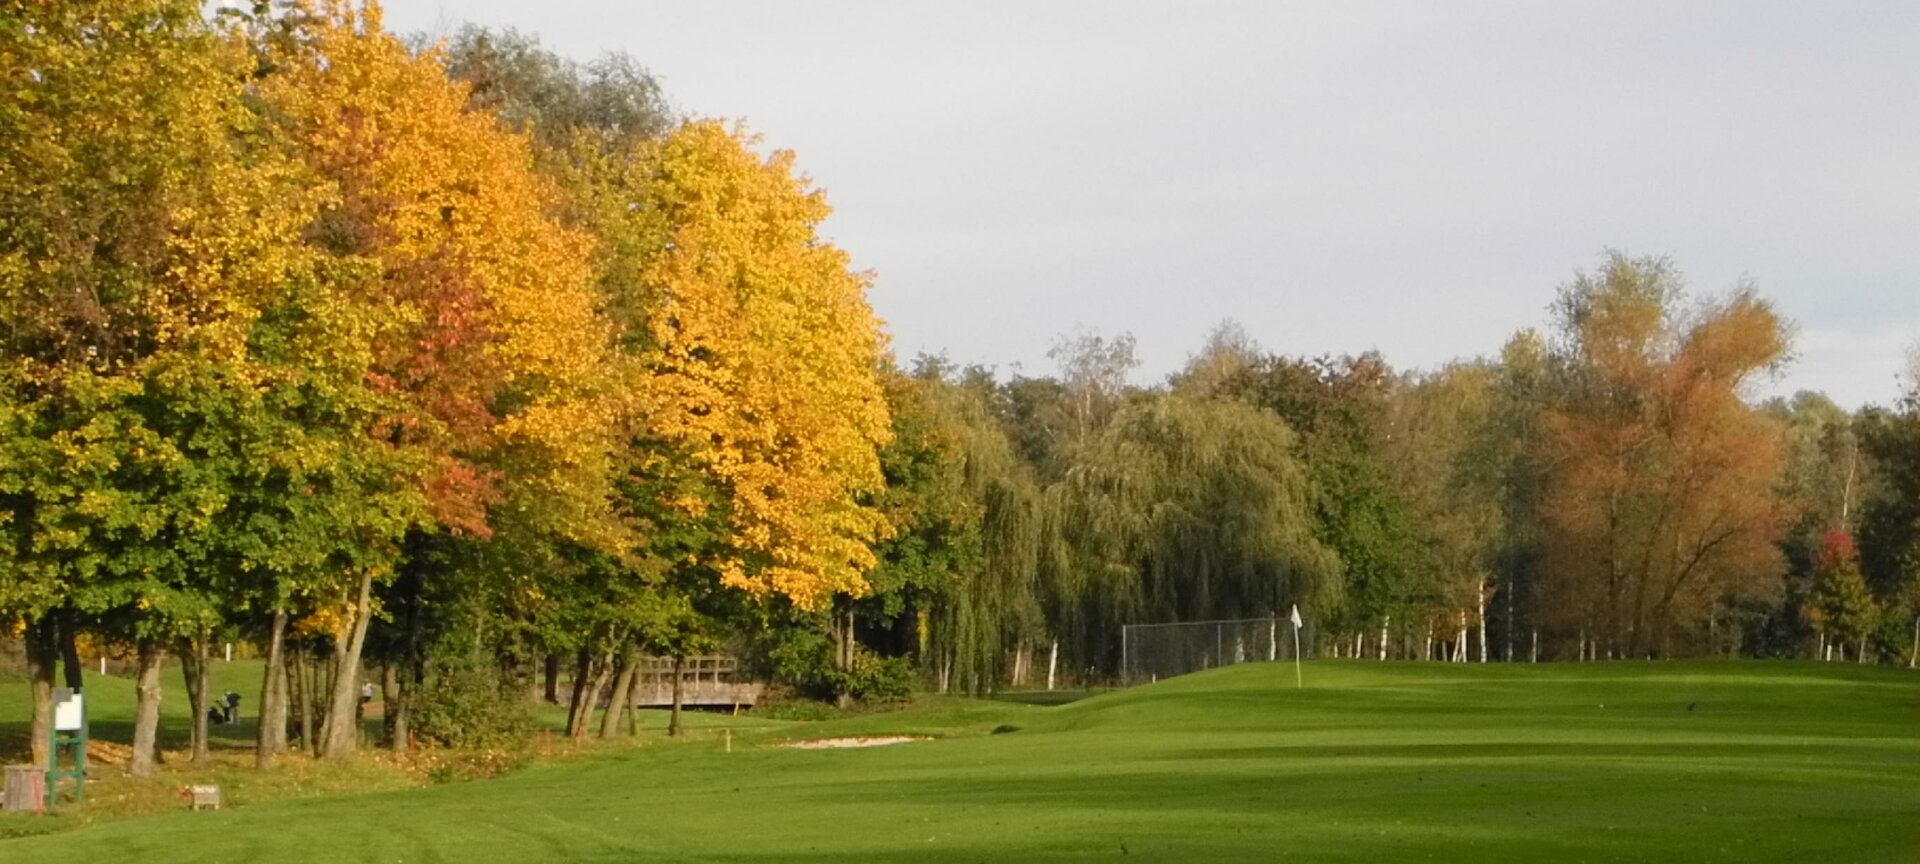 Golfclub Hasselt - herfst